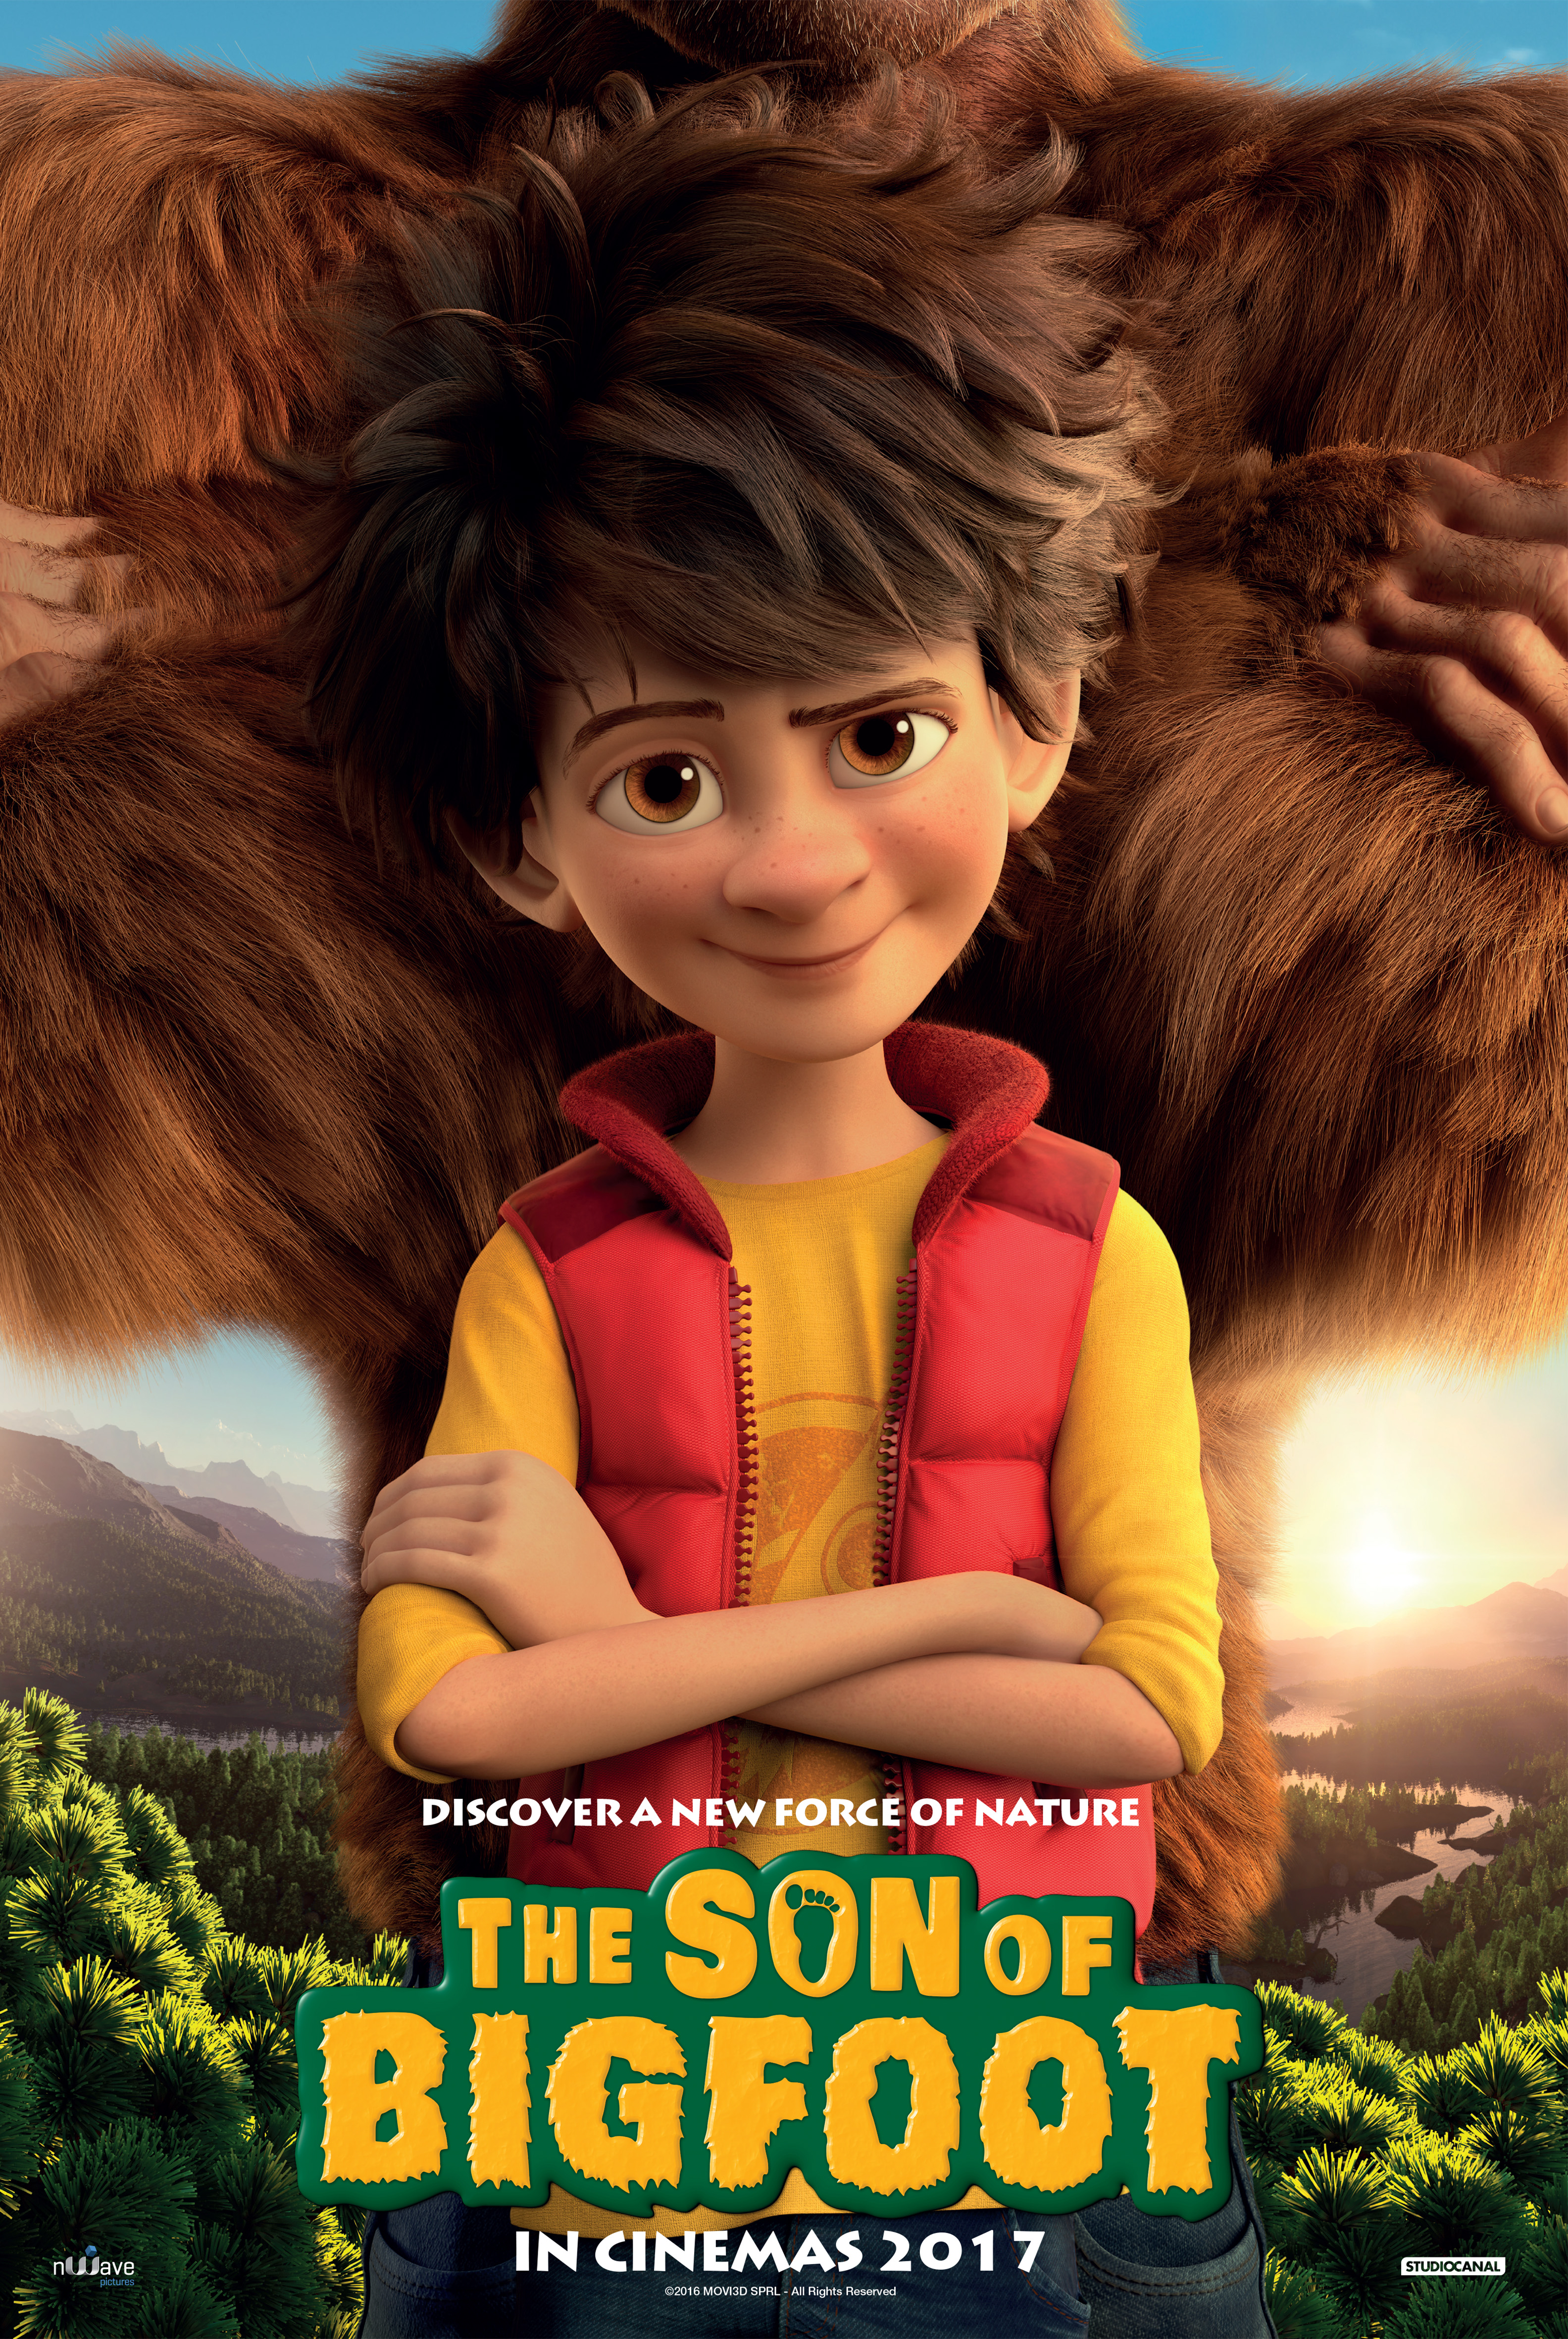 Nonton film The Son of Bigfoot layarkaca21 indoxx1 ganool online streaming terbaru